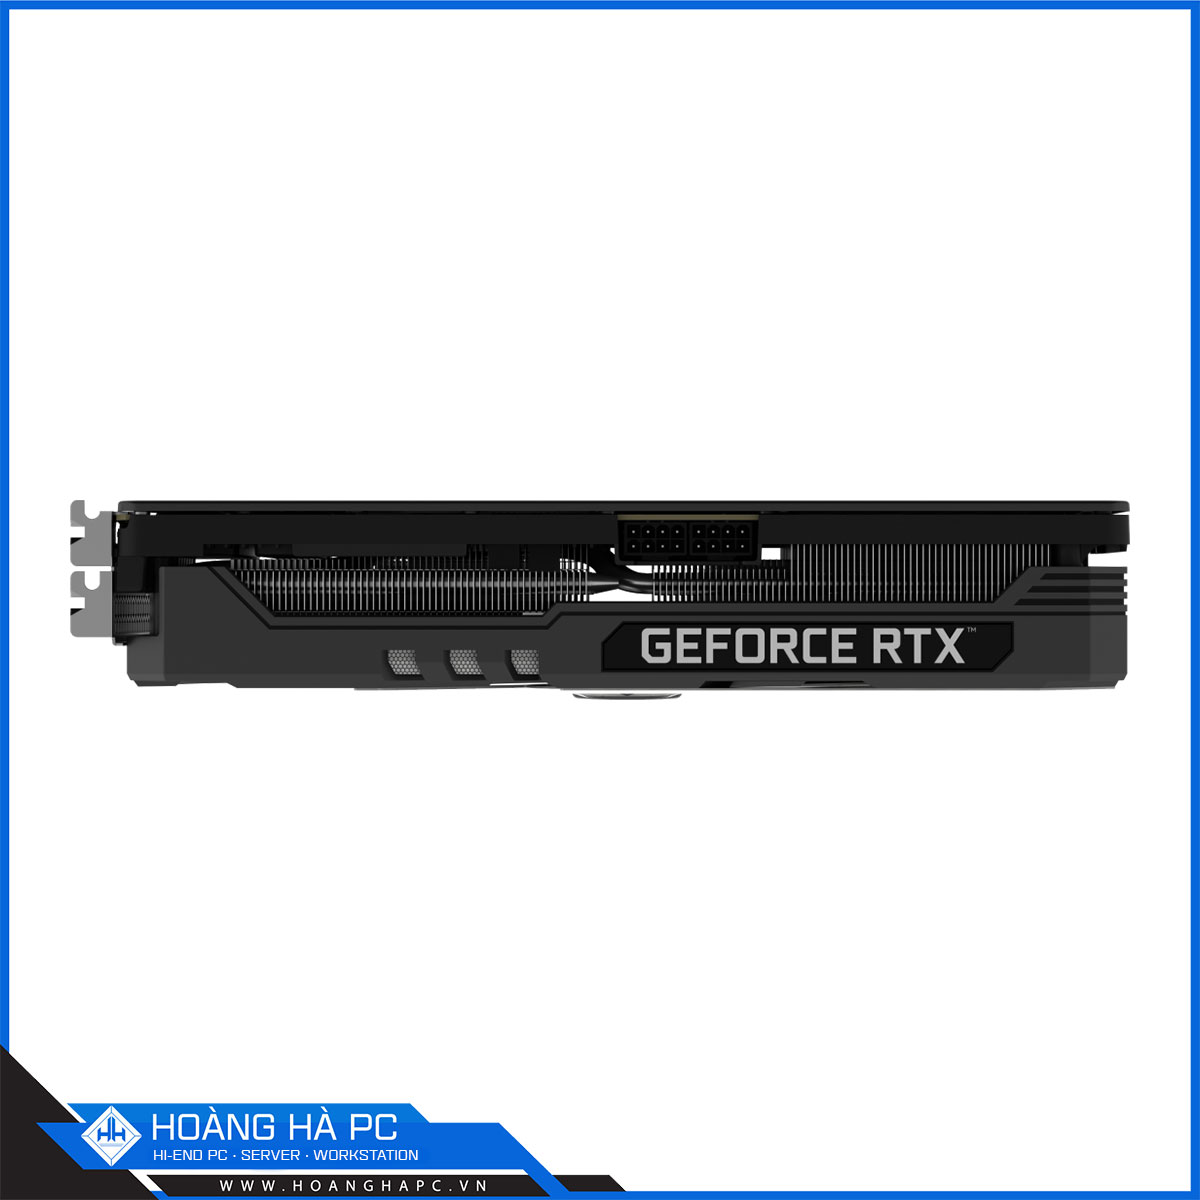 VGA Palit GeForce RTX 3070 Gaming Pro 8GB (8GB GDDR6, 256-bit, HDMI +DP, 2x8-pin)